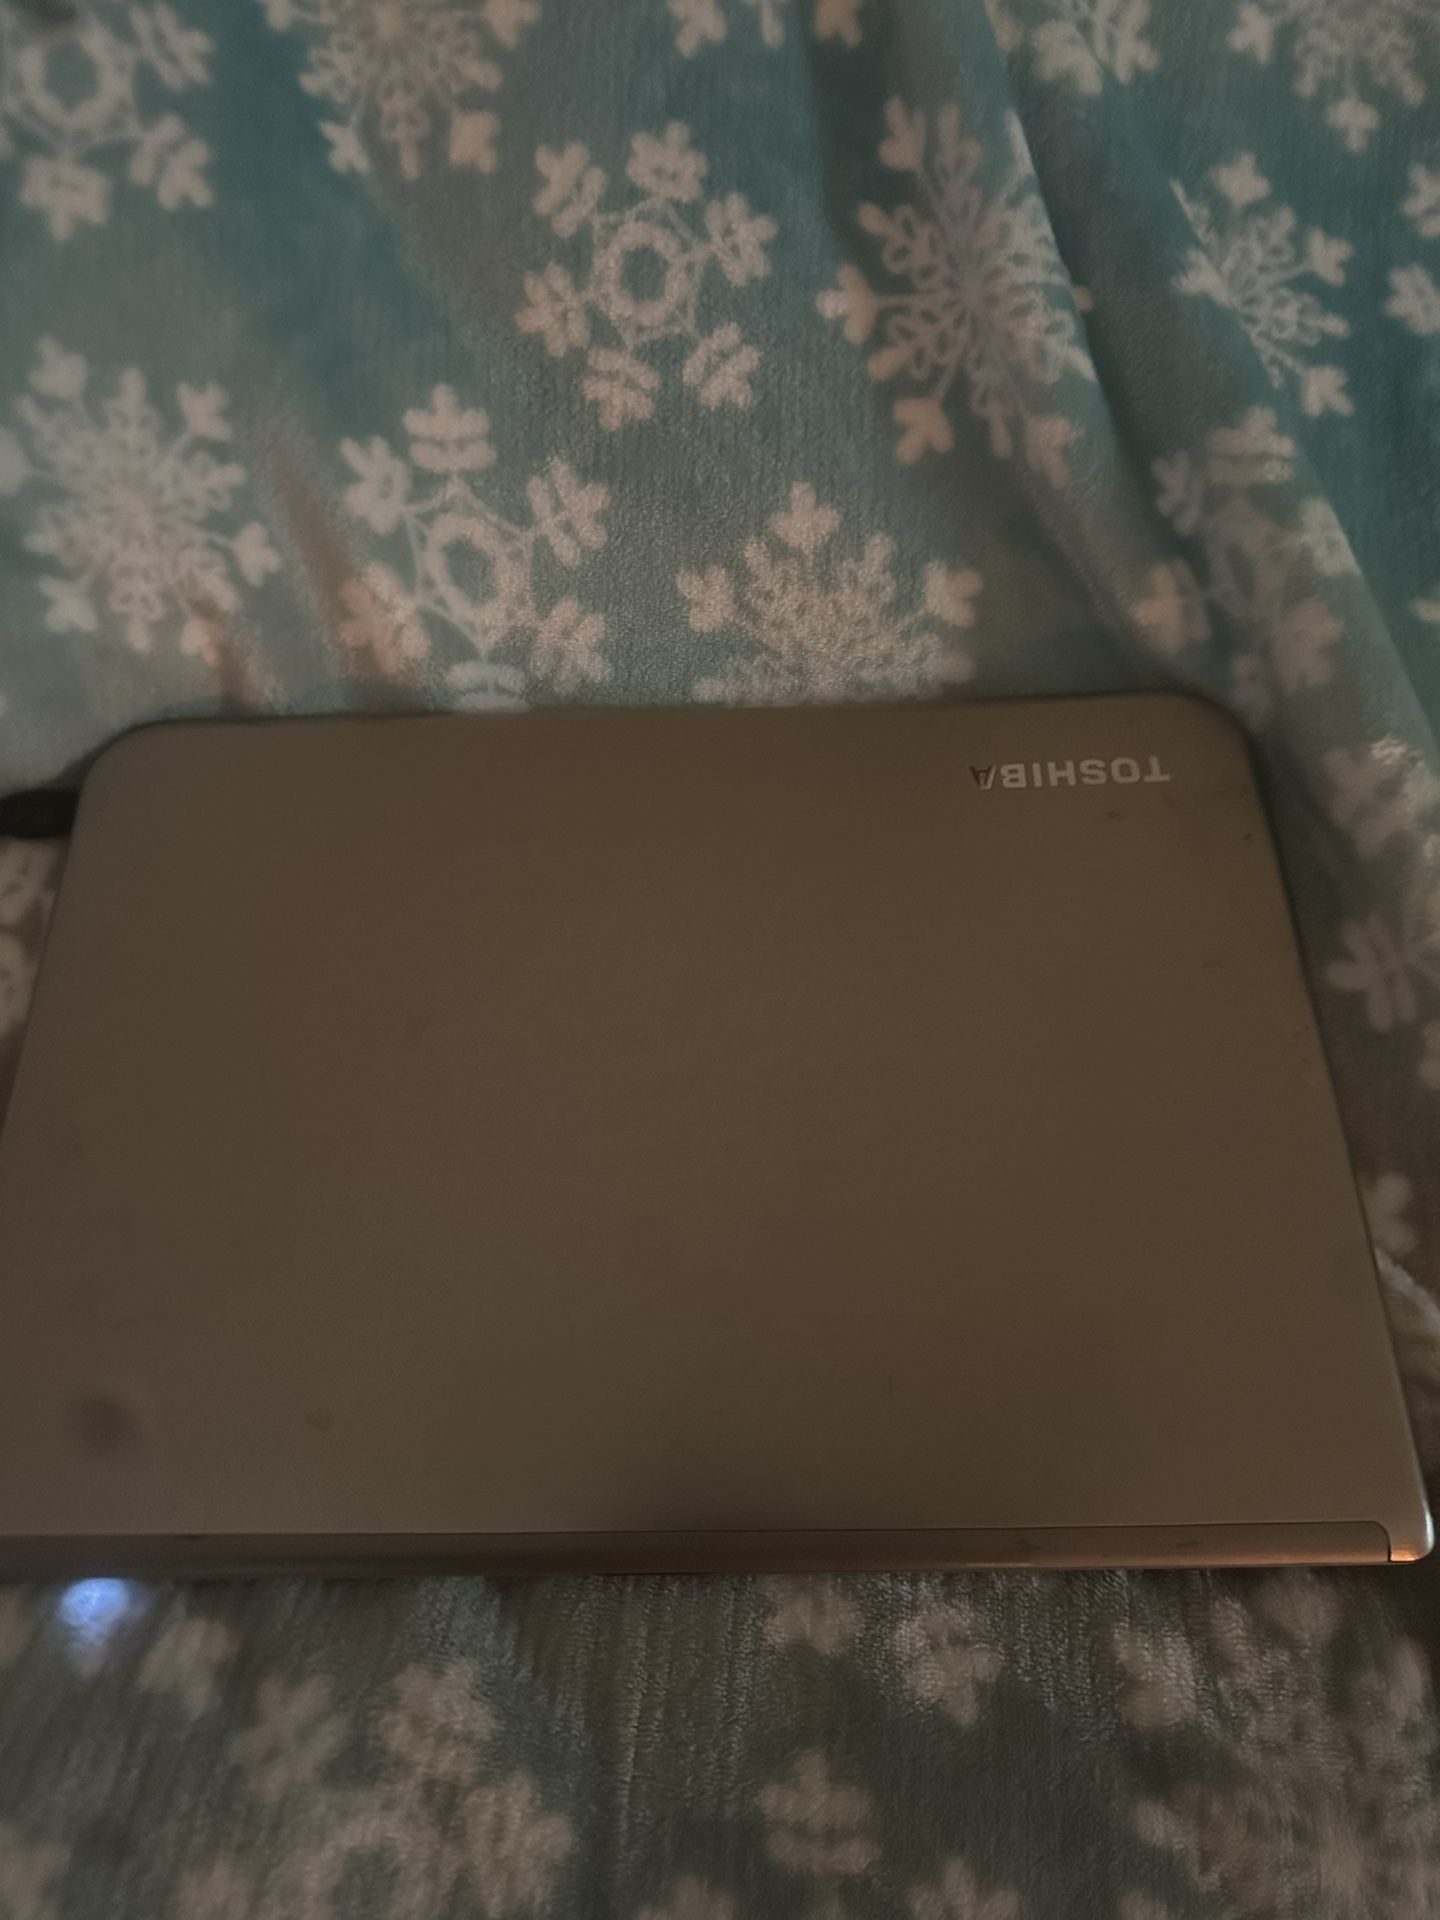 Toshiba Laptop (Broken)